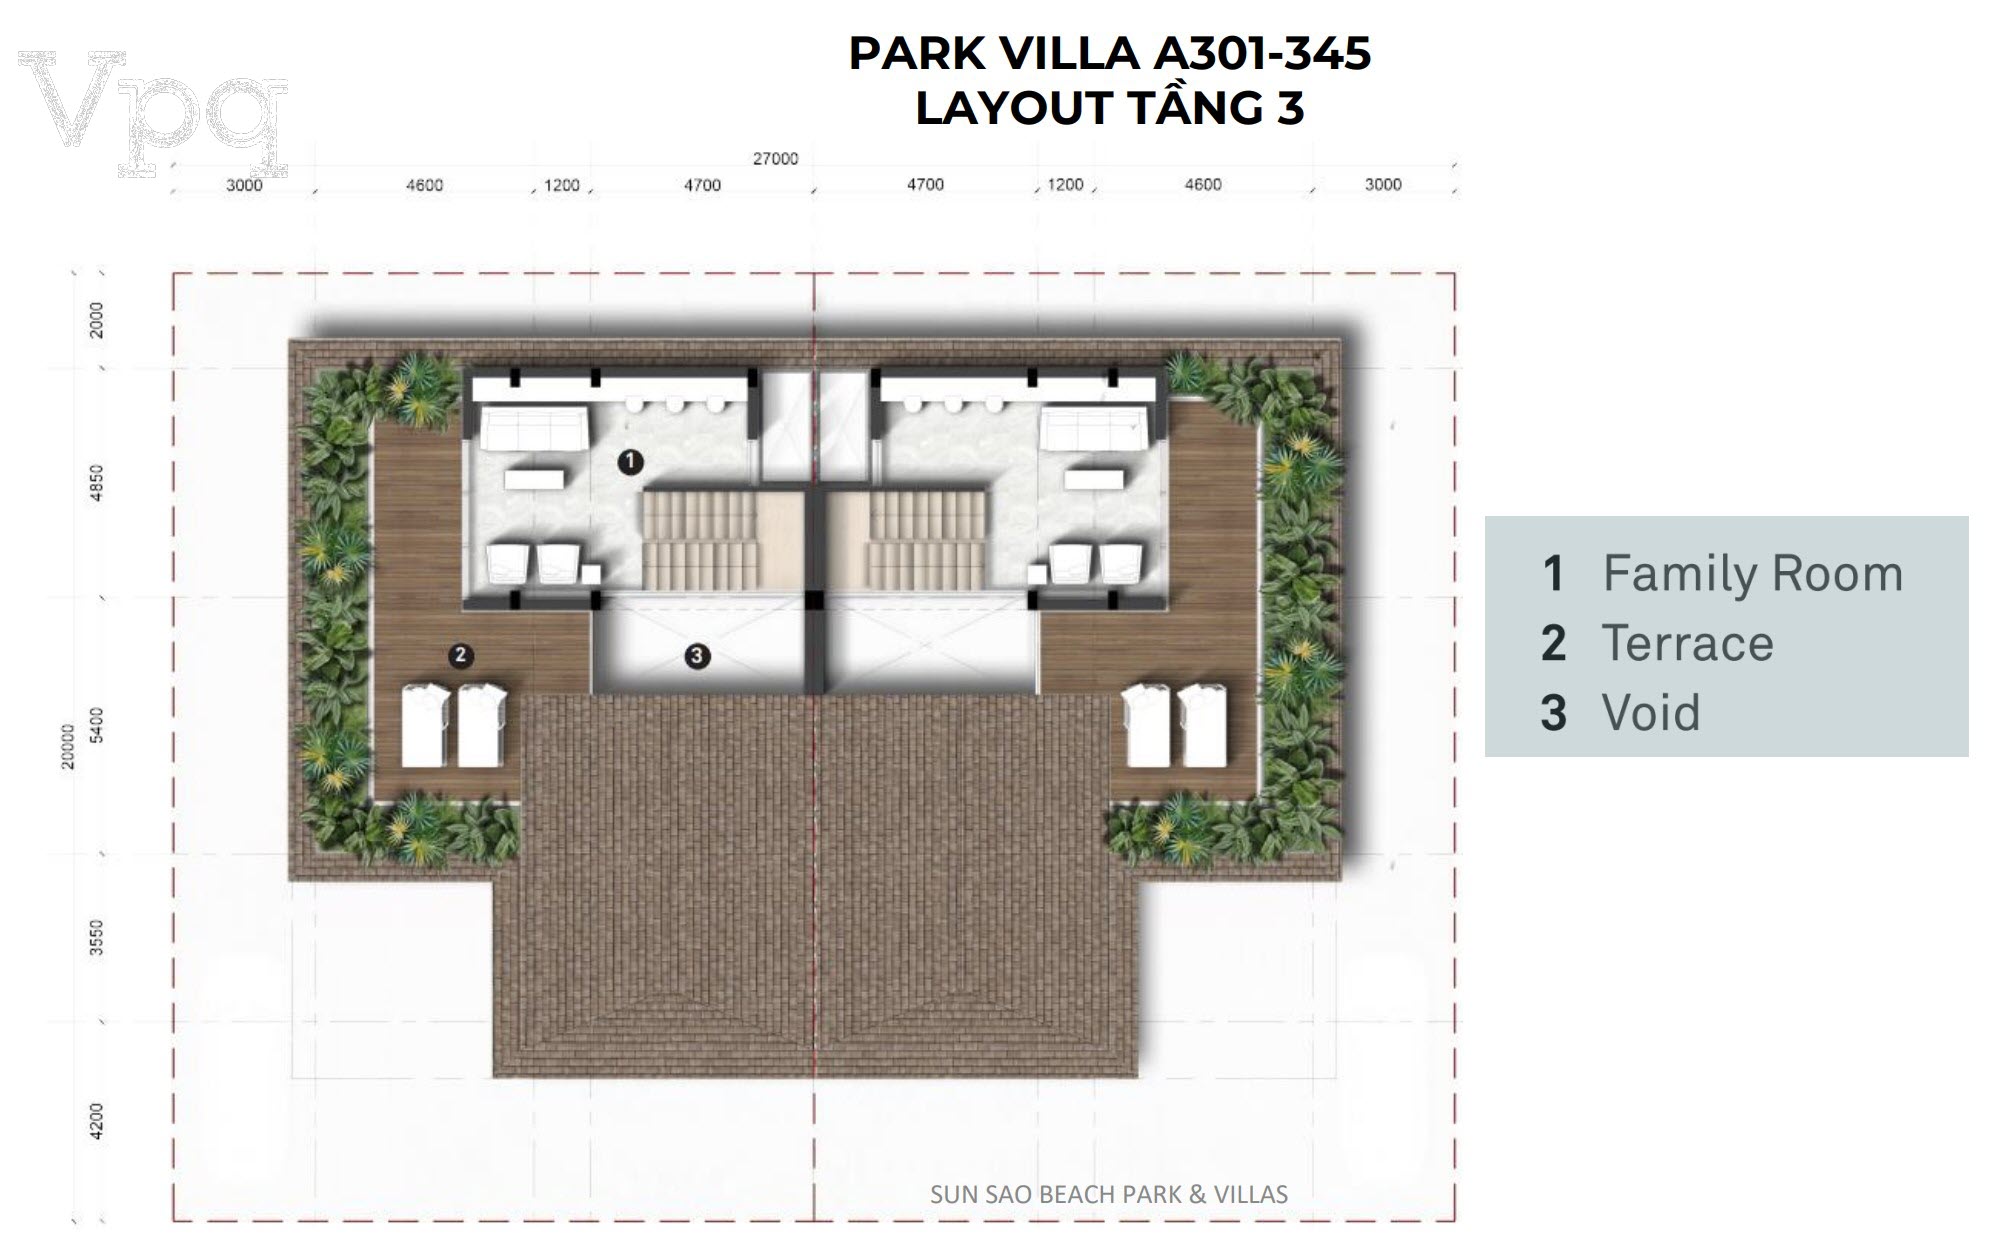 Makaio Park Villa A301-A345 - Layout tầng 3